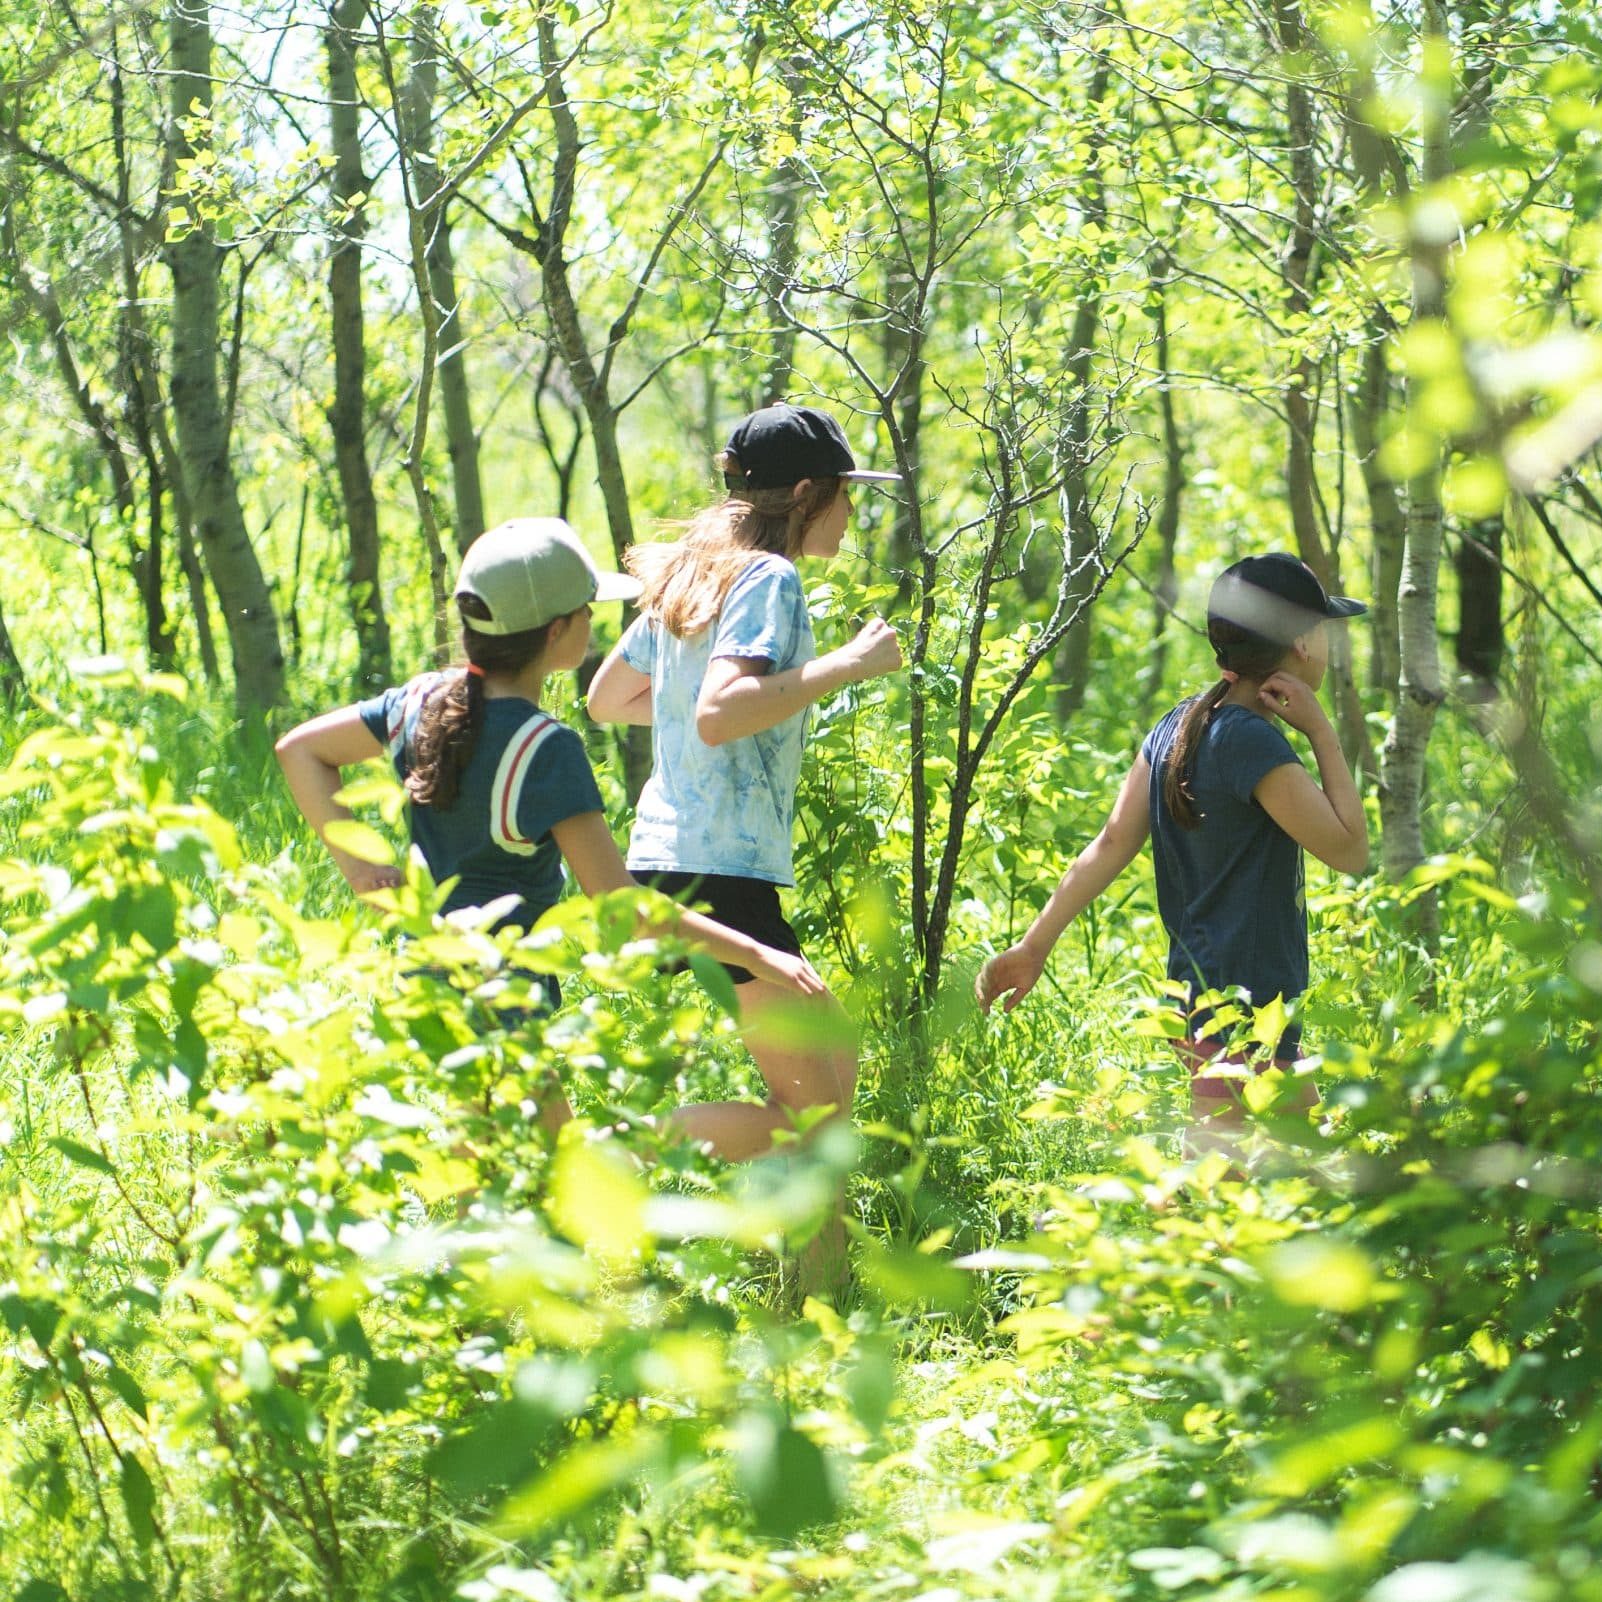 Group of children running through forest as seen through trees.